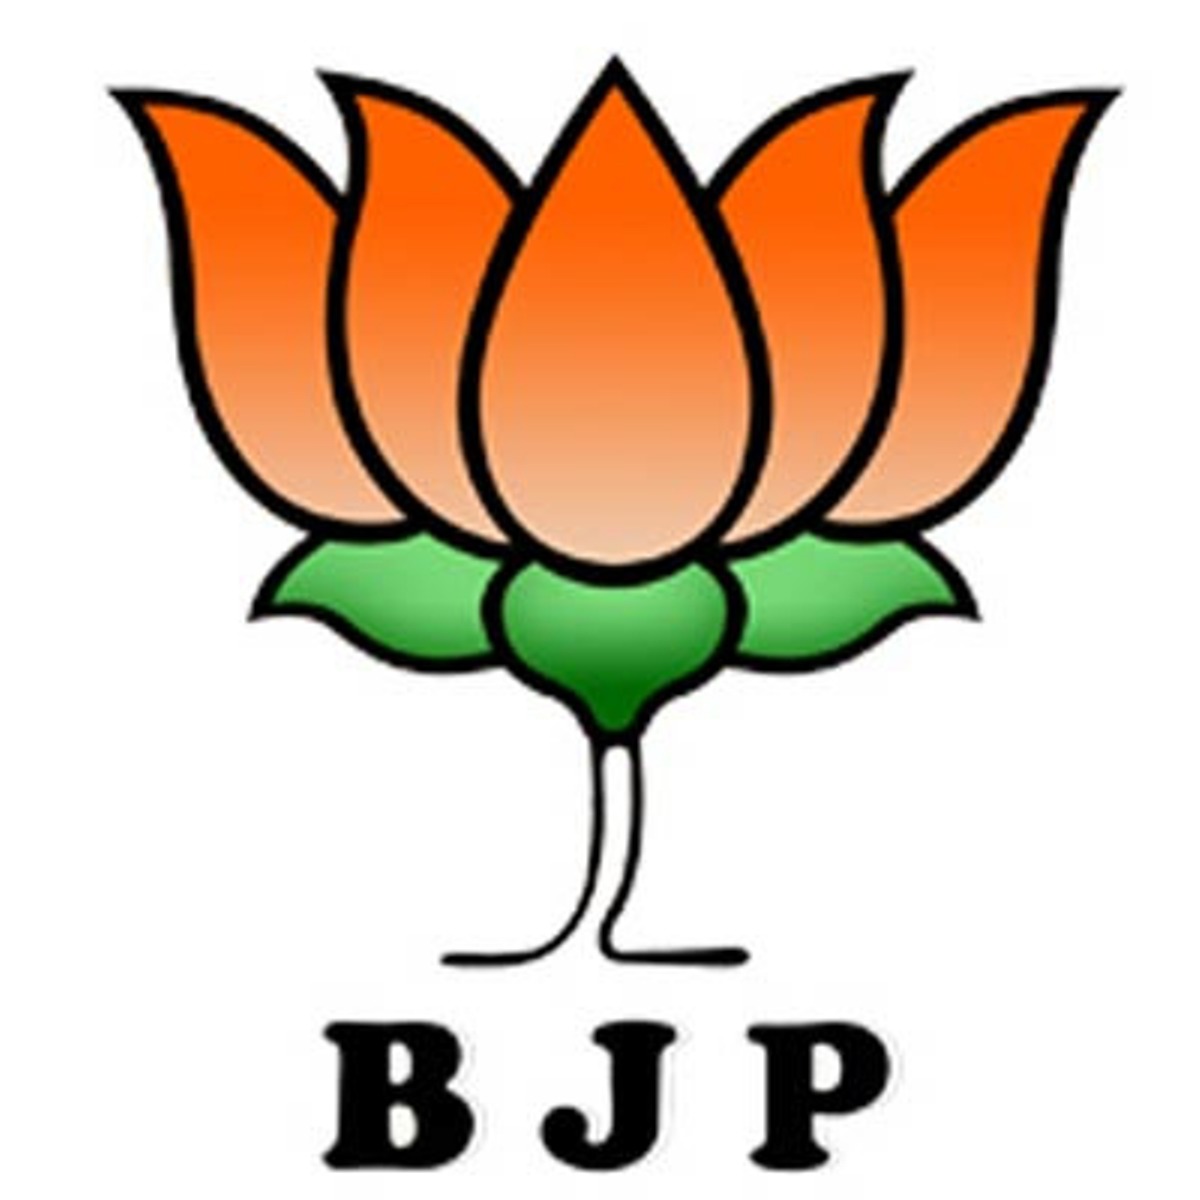 Jodhpur,bjp news,Political news,jodhpur news,